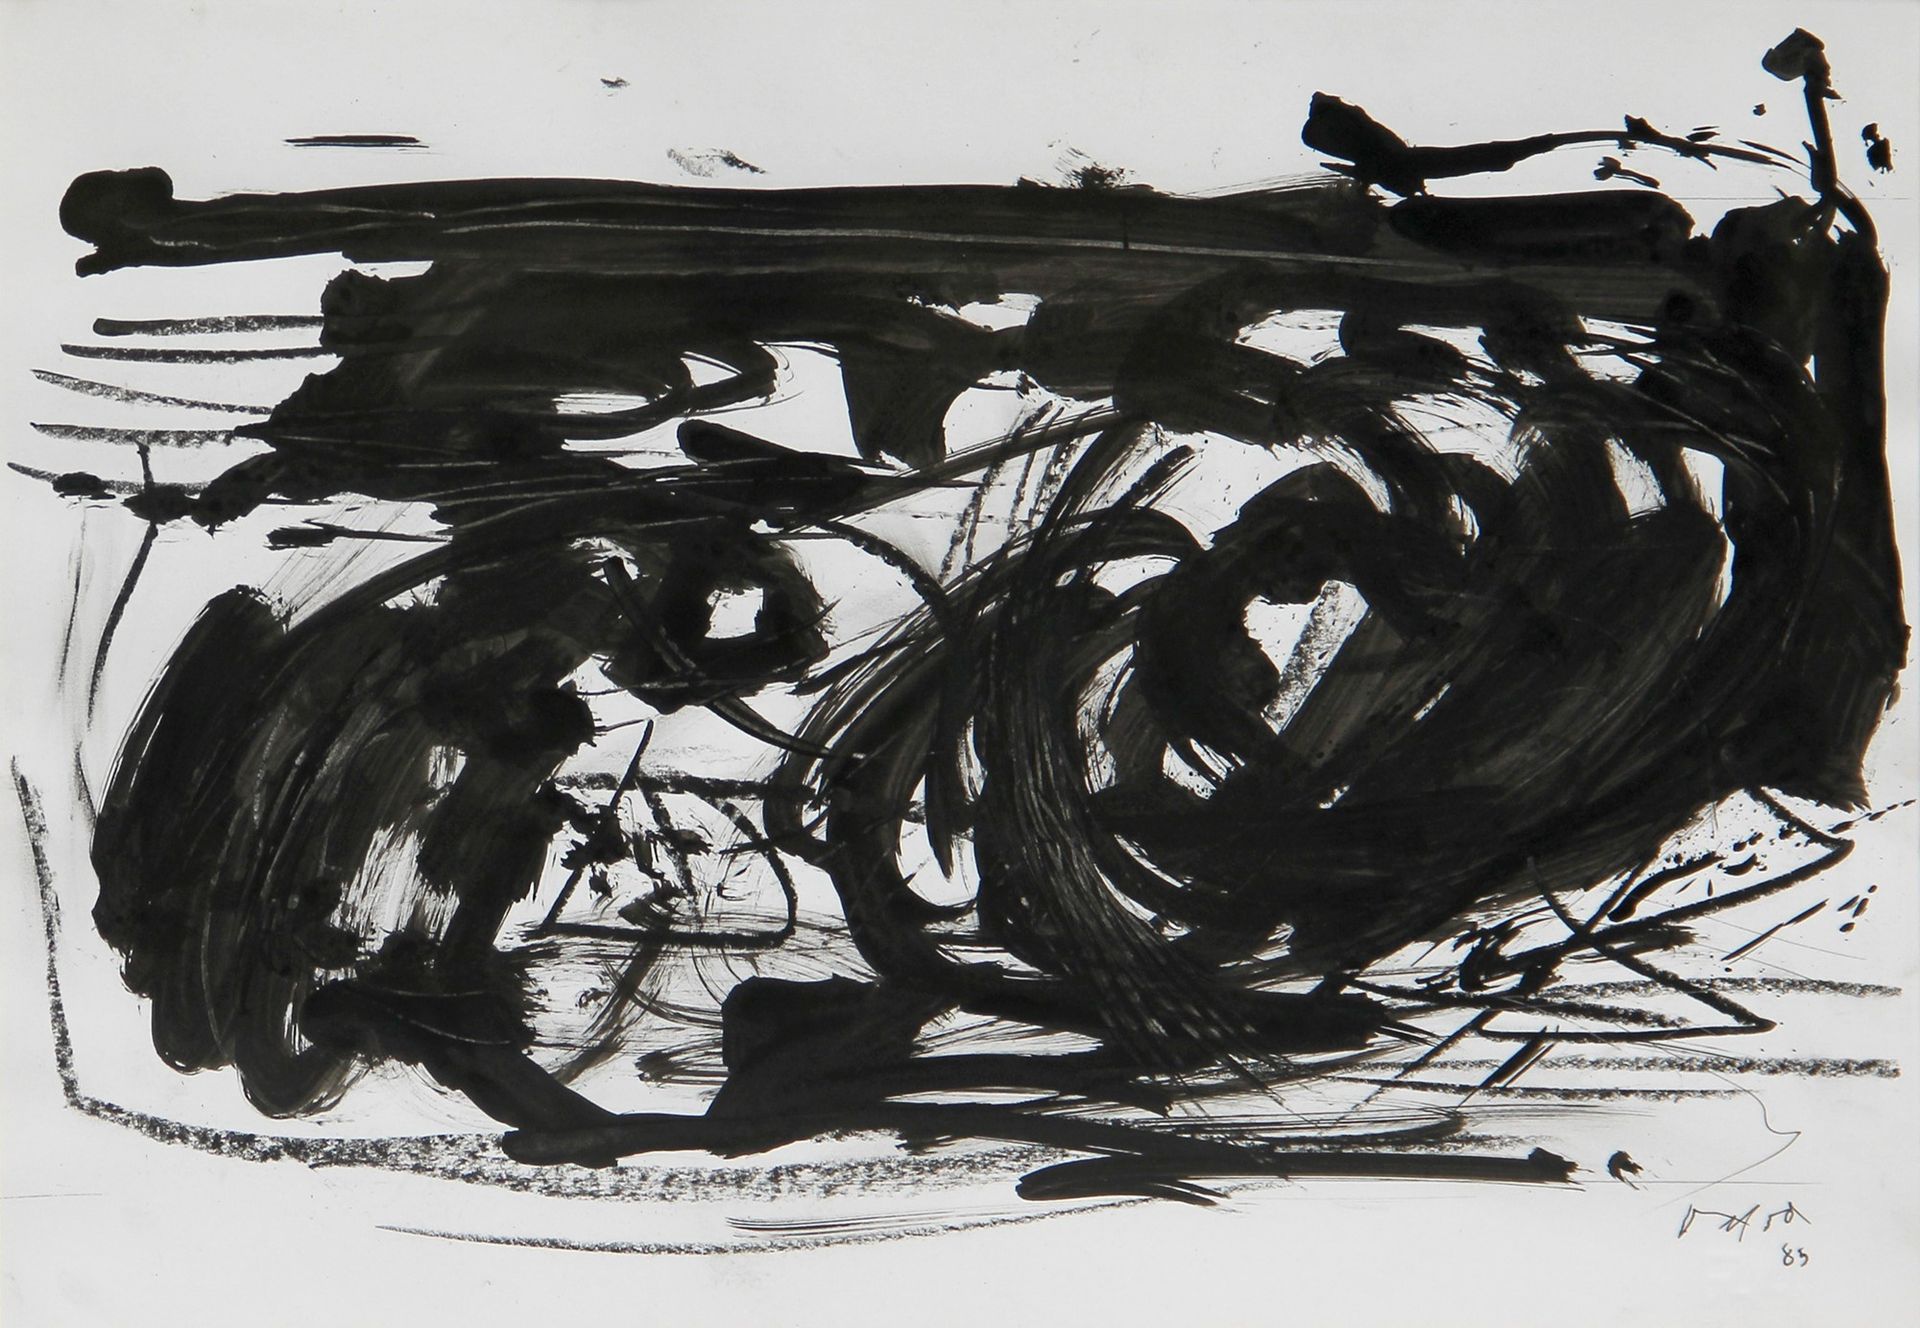 Emilio VEDOVA Untitled 1985, encre et fusain sur carton, cm. 33x47,8

Certificat&hellip;